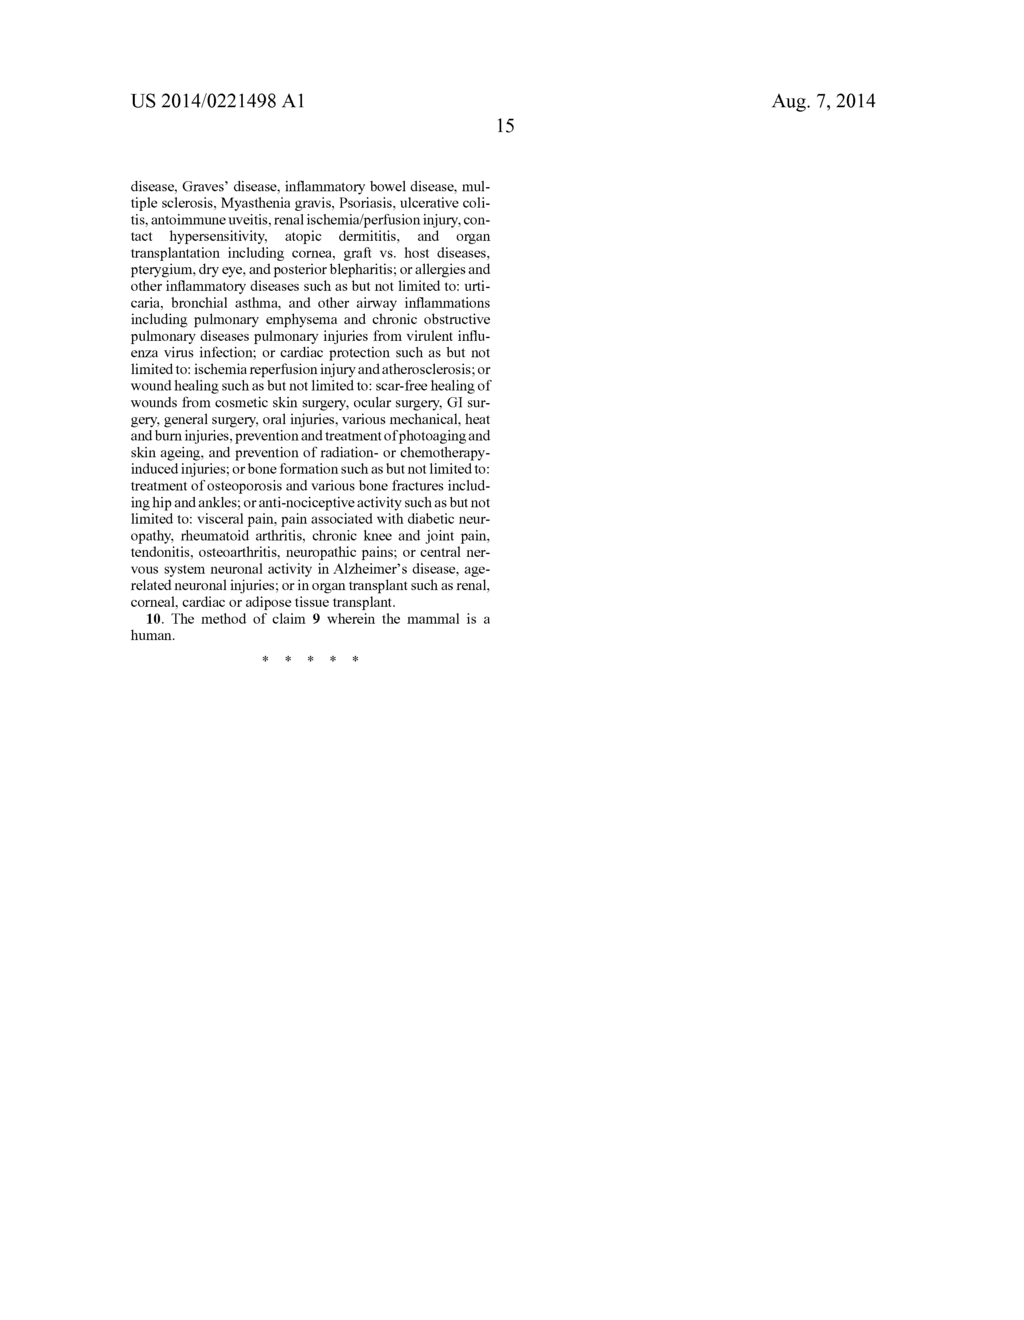 AMINO DIOL DERIVATIVES AS SPHINGOSINE 1-PHOSPHATE (S1P) RECEPTOR     MODULATORS - diagram, schematic, and image 16